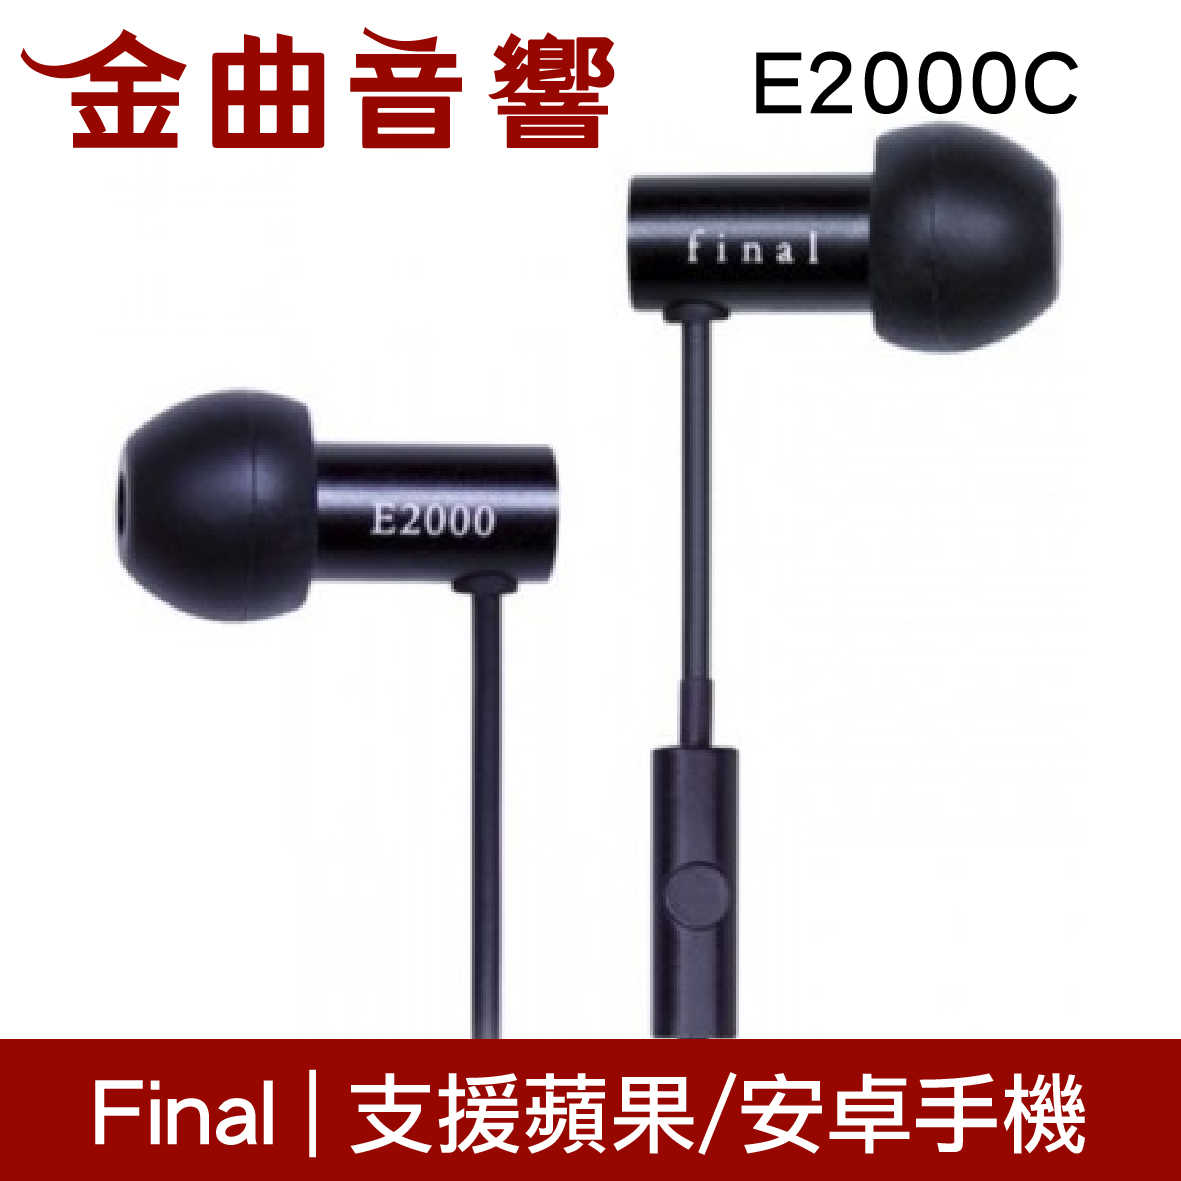 Final E2000C 支援智慧型手機 線控耳道式耳機 黑色 | 金曲音響